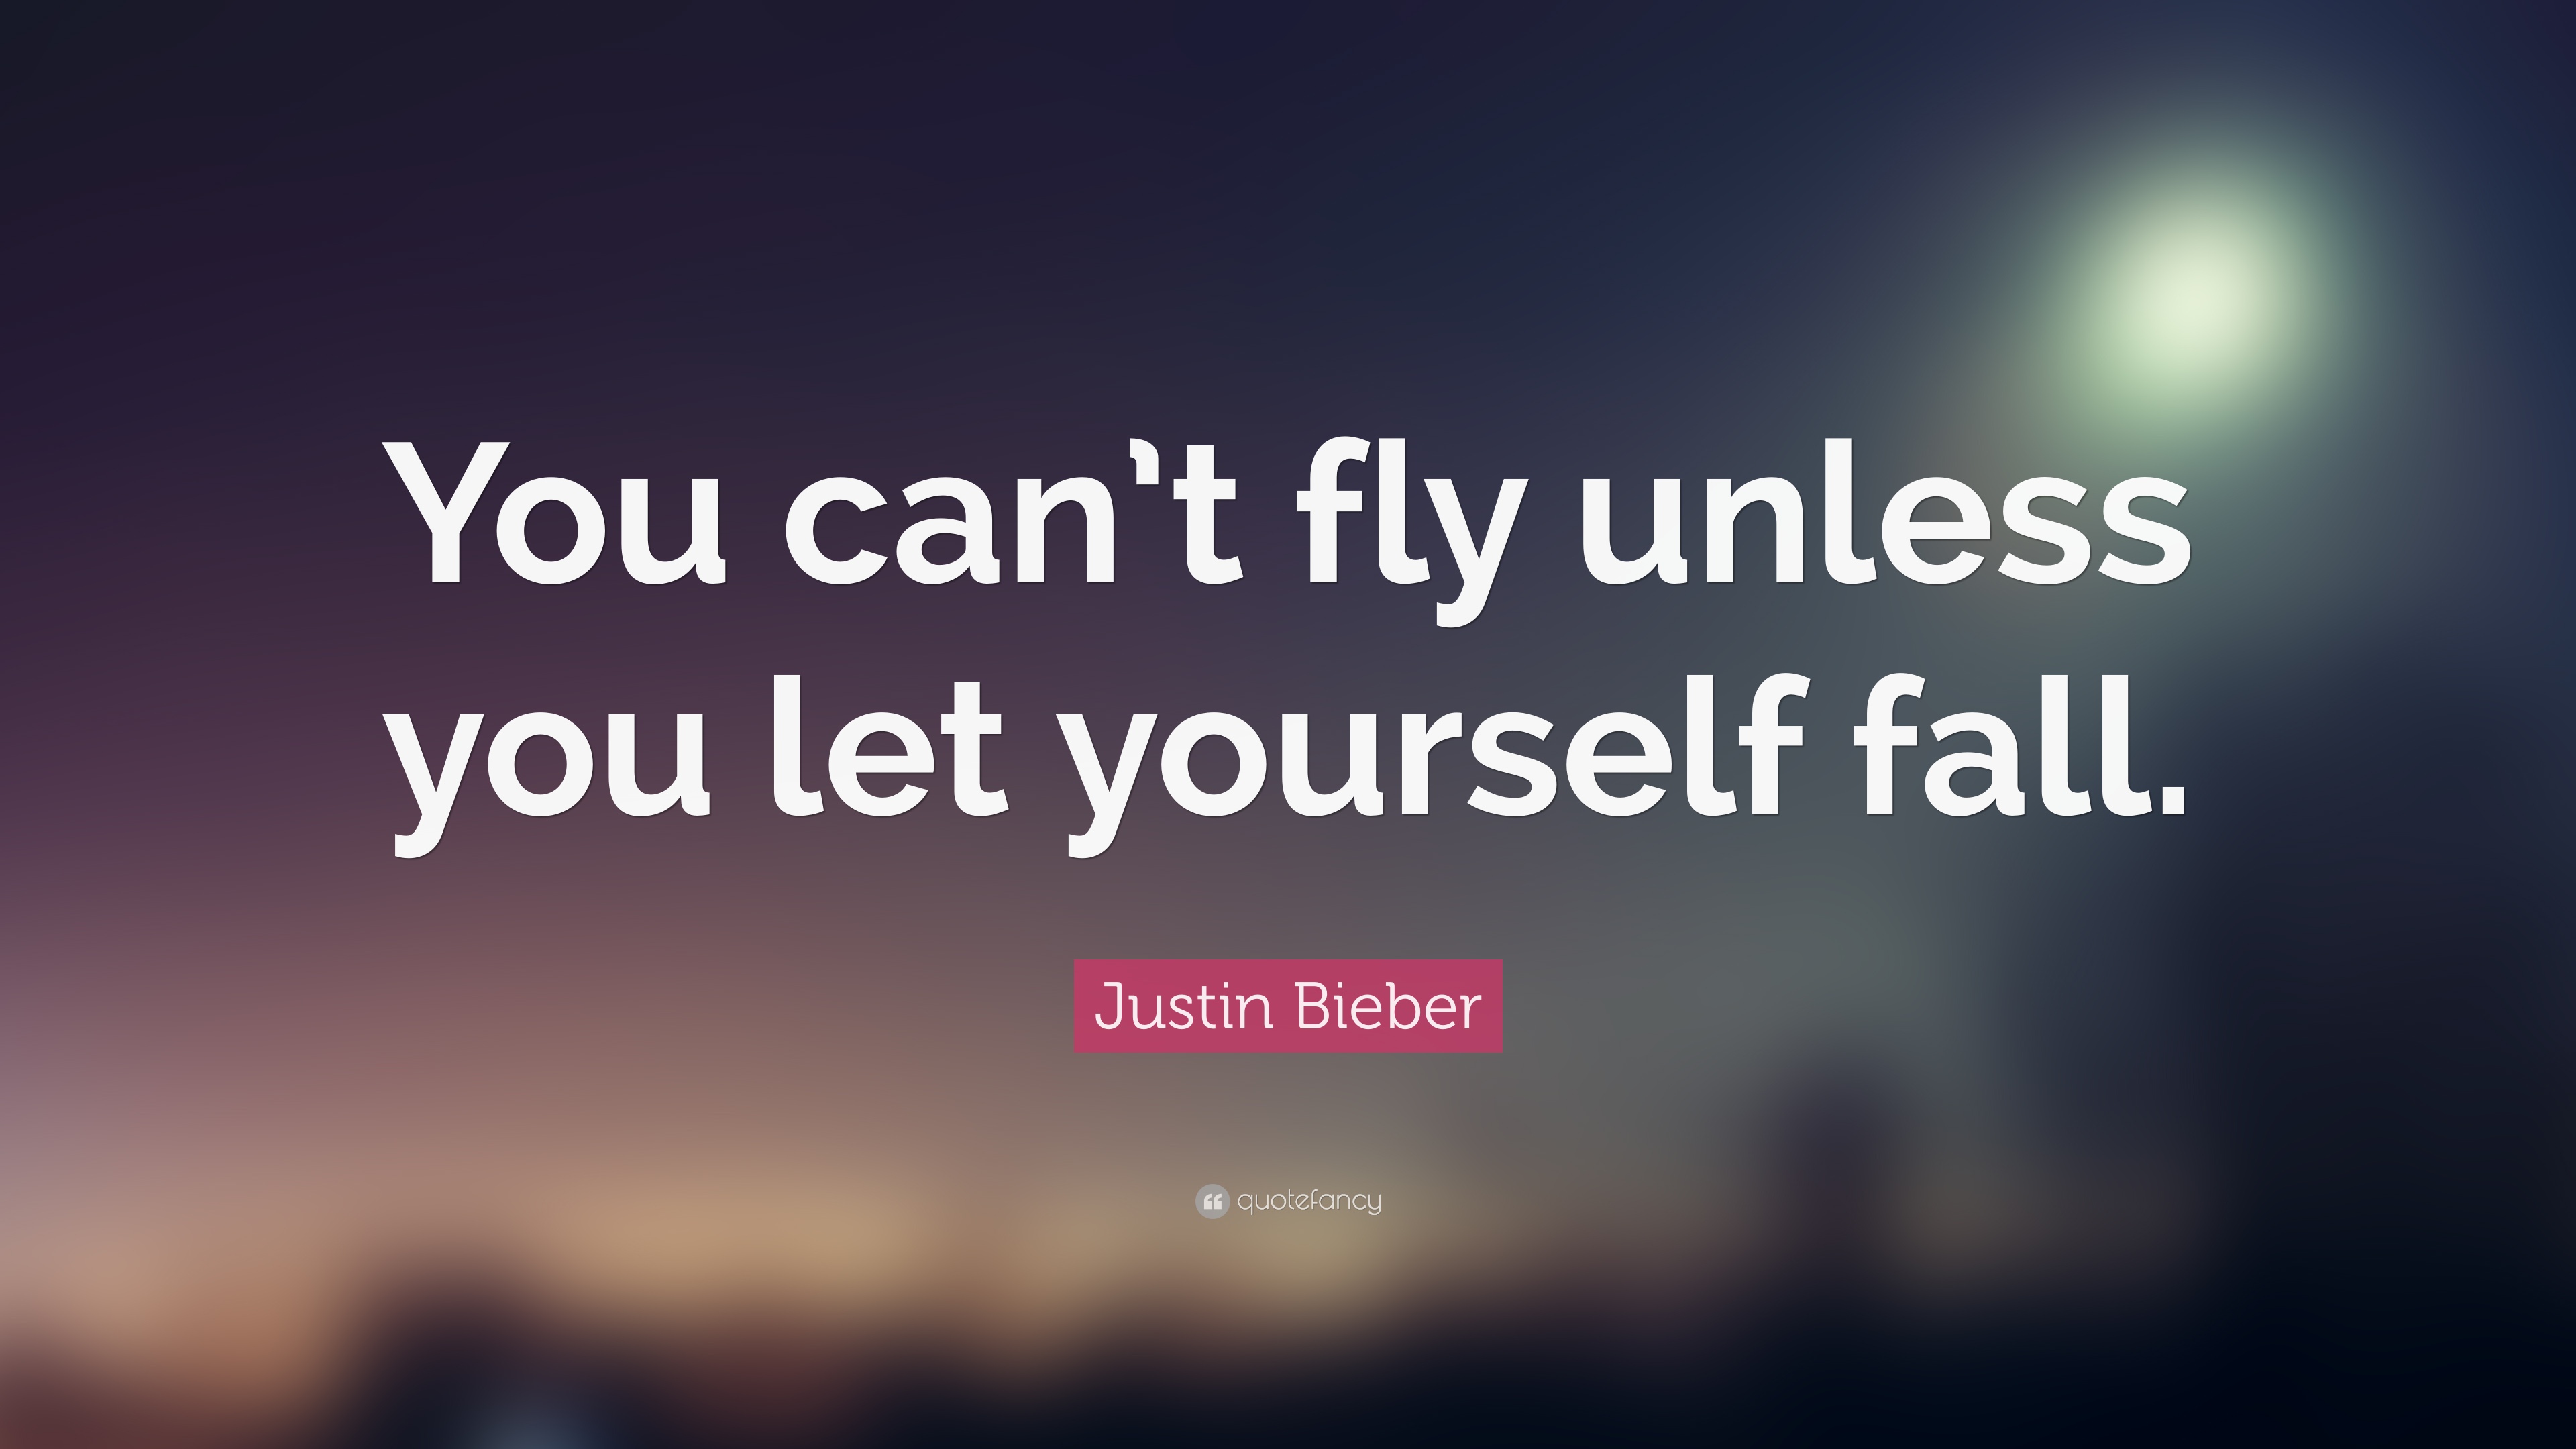 10 Best Justin Bieber Quotes